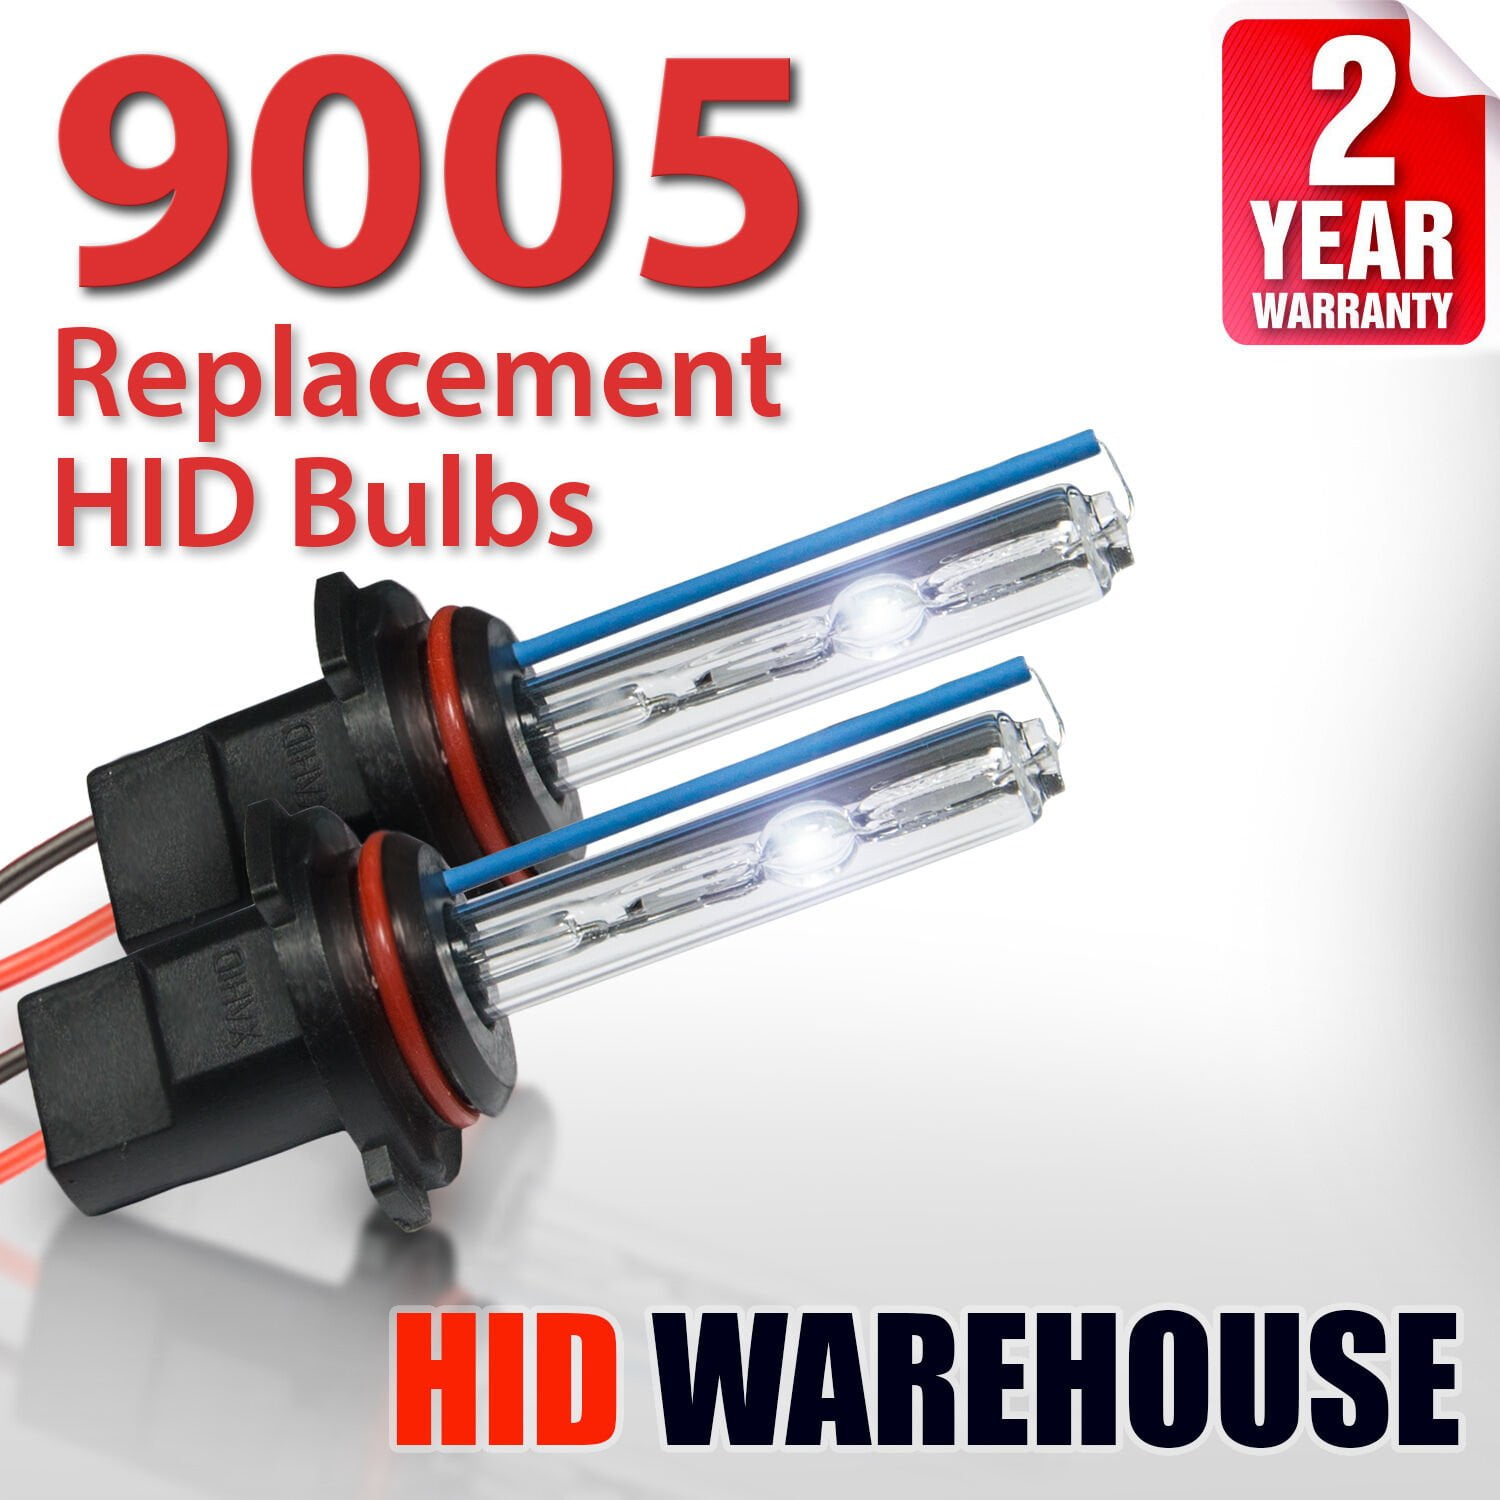 HID-Warehouse HID Xenon Replacement Bulbs - 9006 6000K - Light Blue (1 Pair)